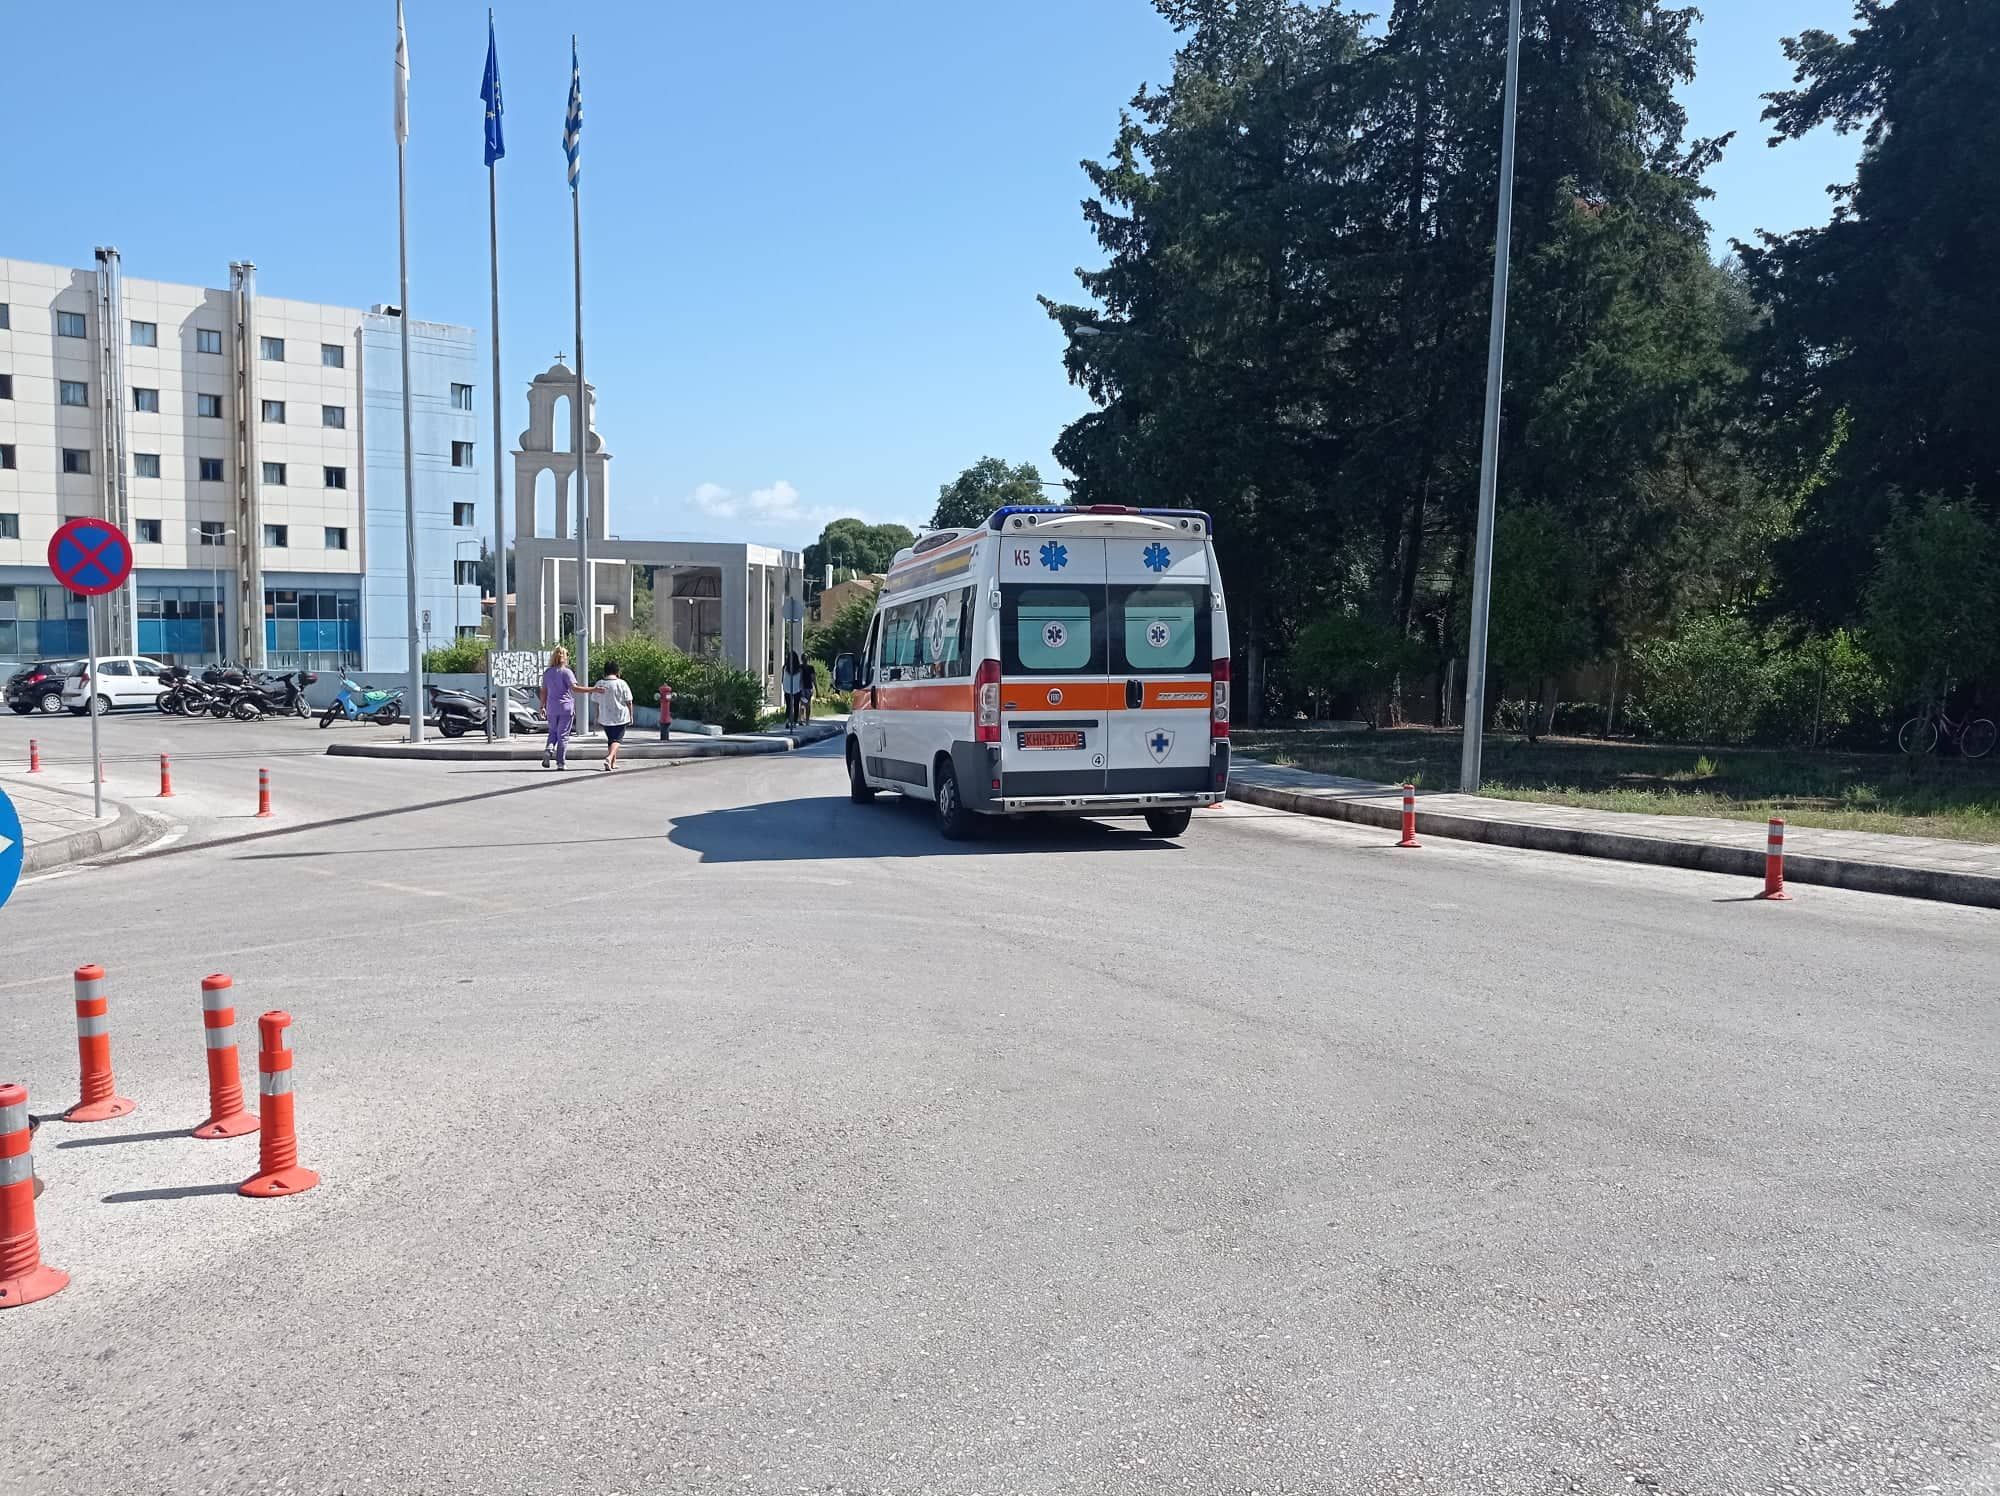 Covid patient, 75, at Corfu Hospital dies